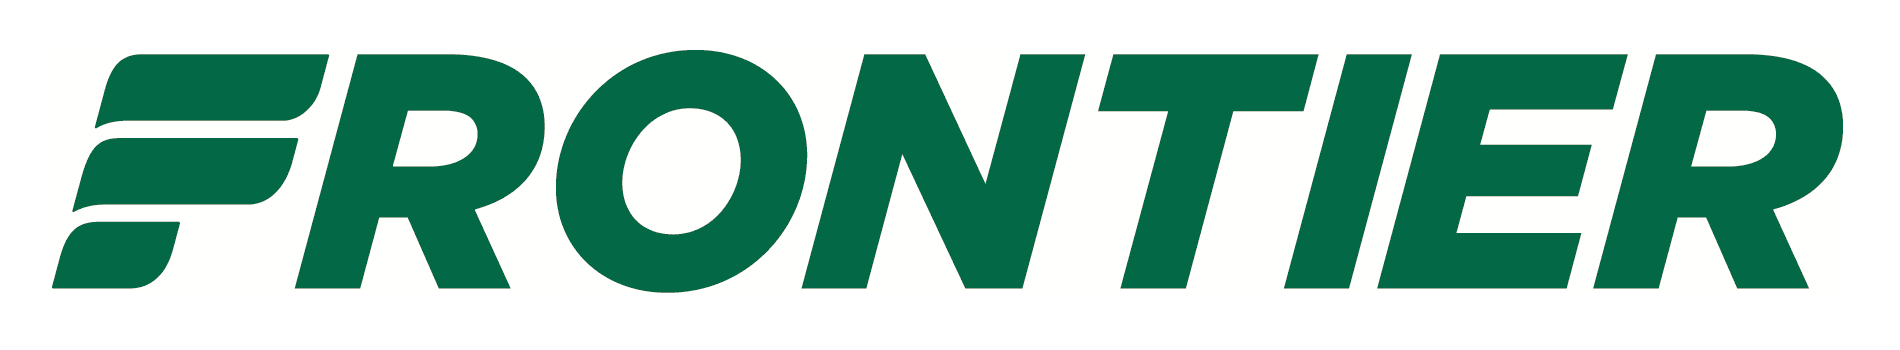 Frontier Airlines Logo - LogoDix